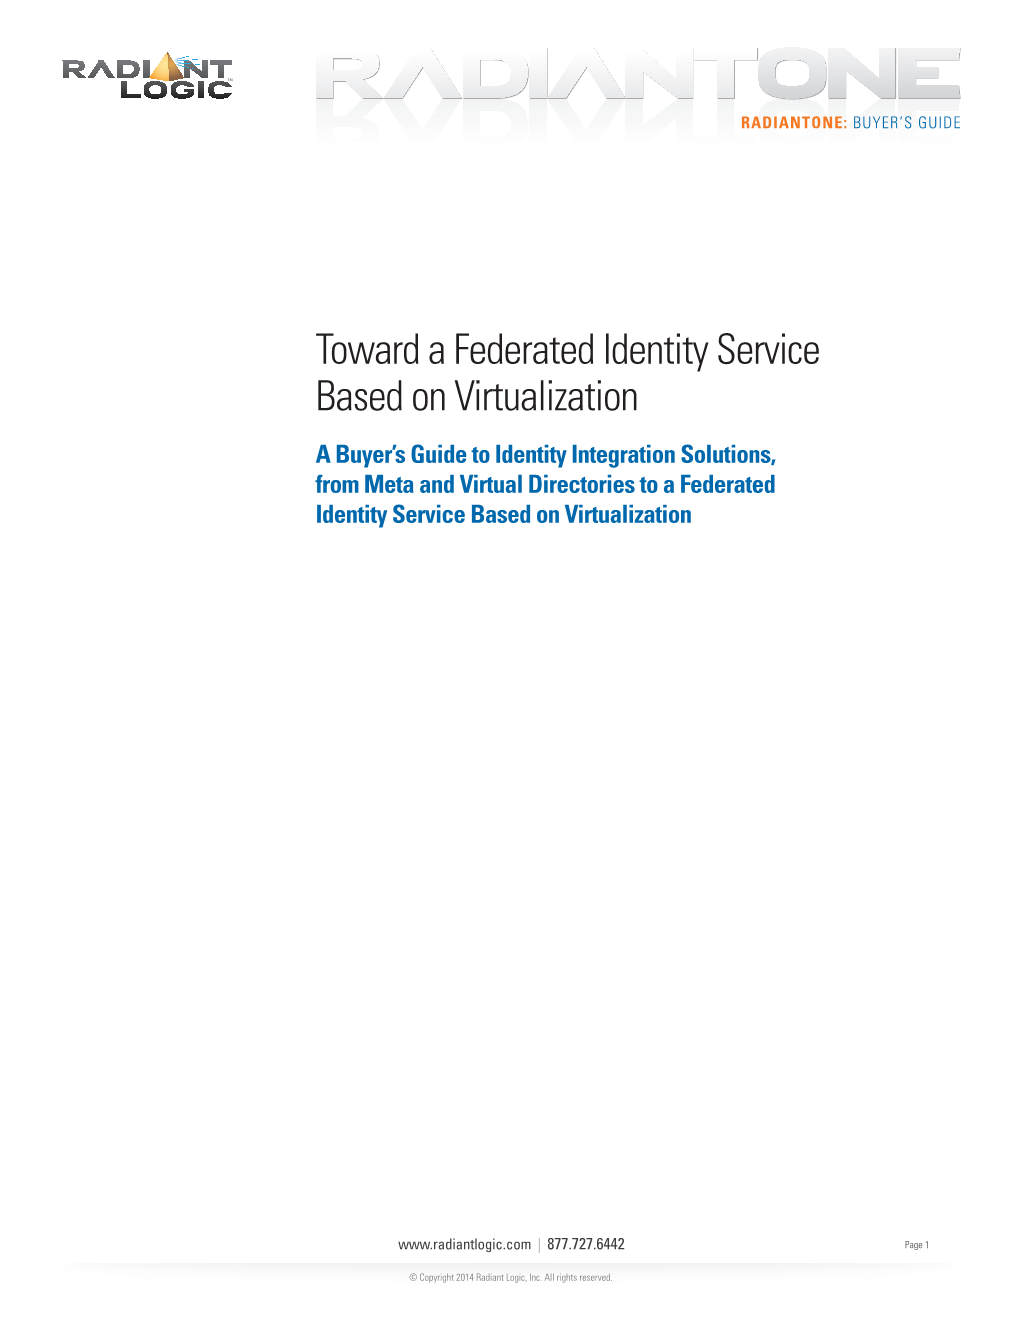 Toward a Federated Identity Service Based on Virtualization